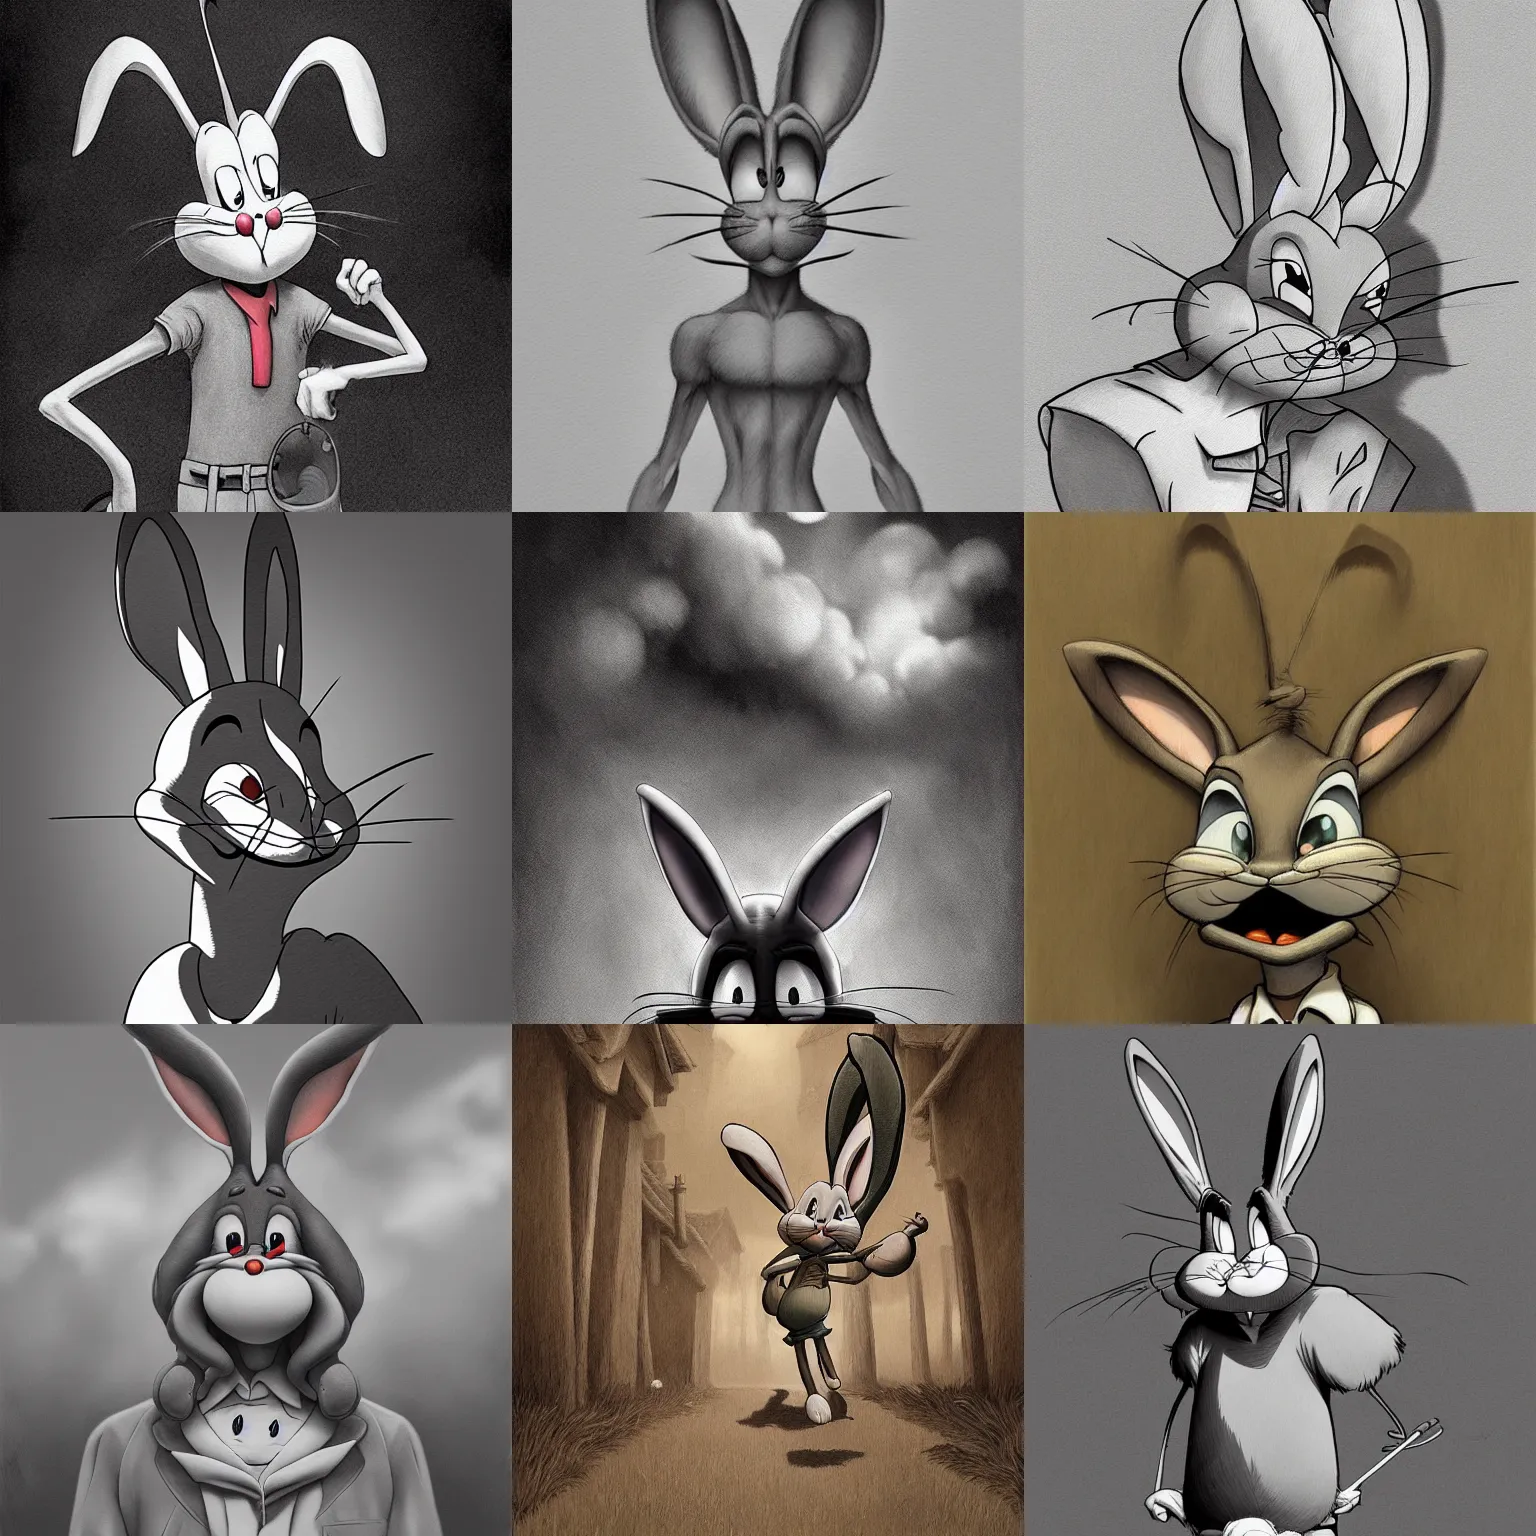 Bugs Bunny Paintings